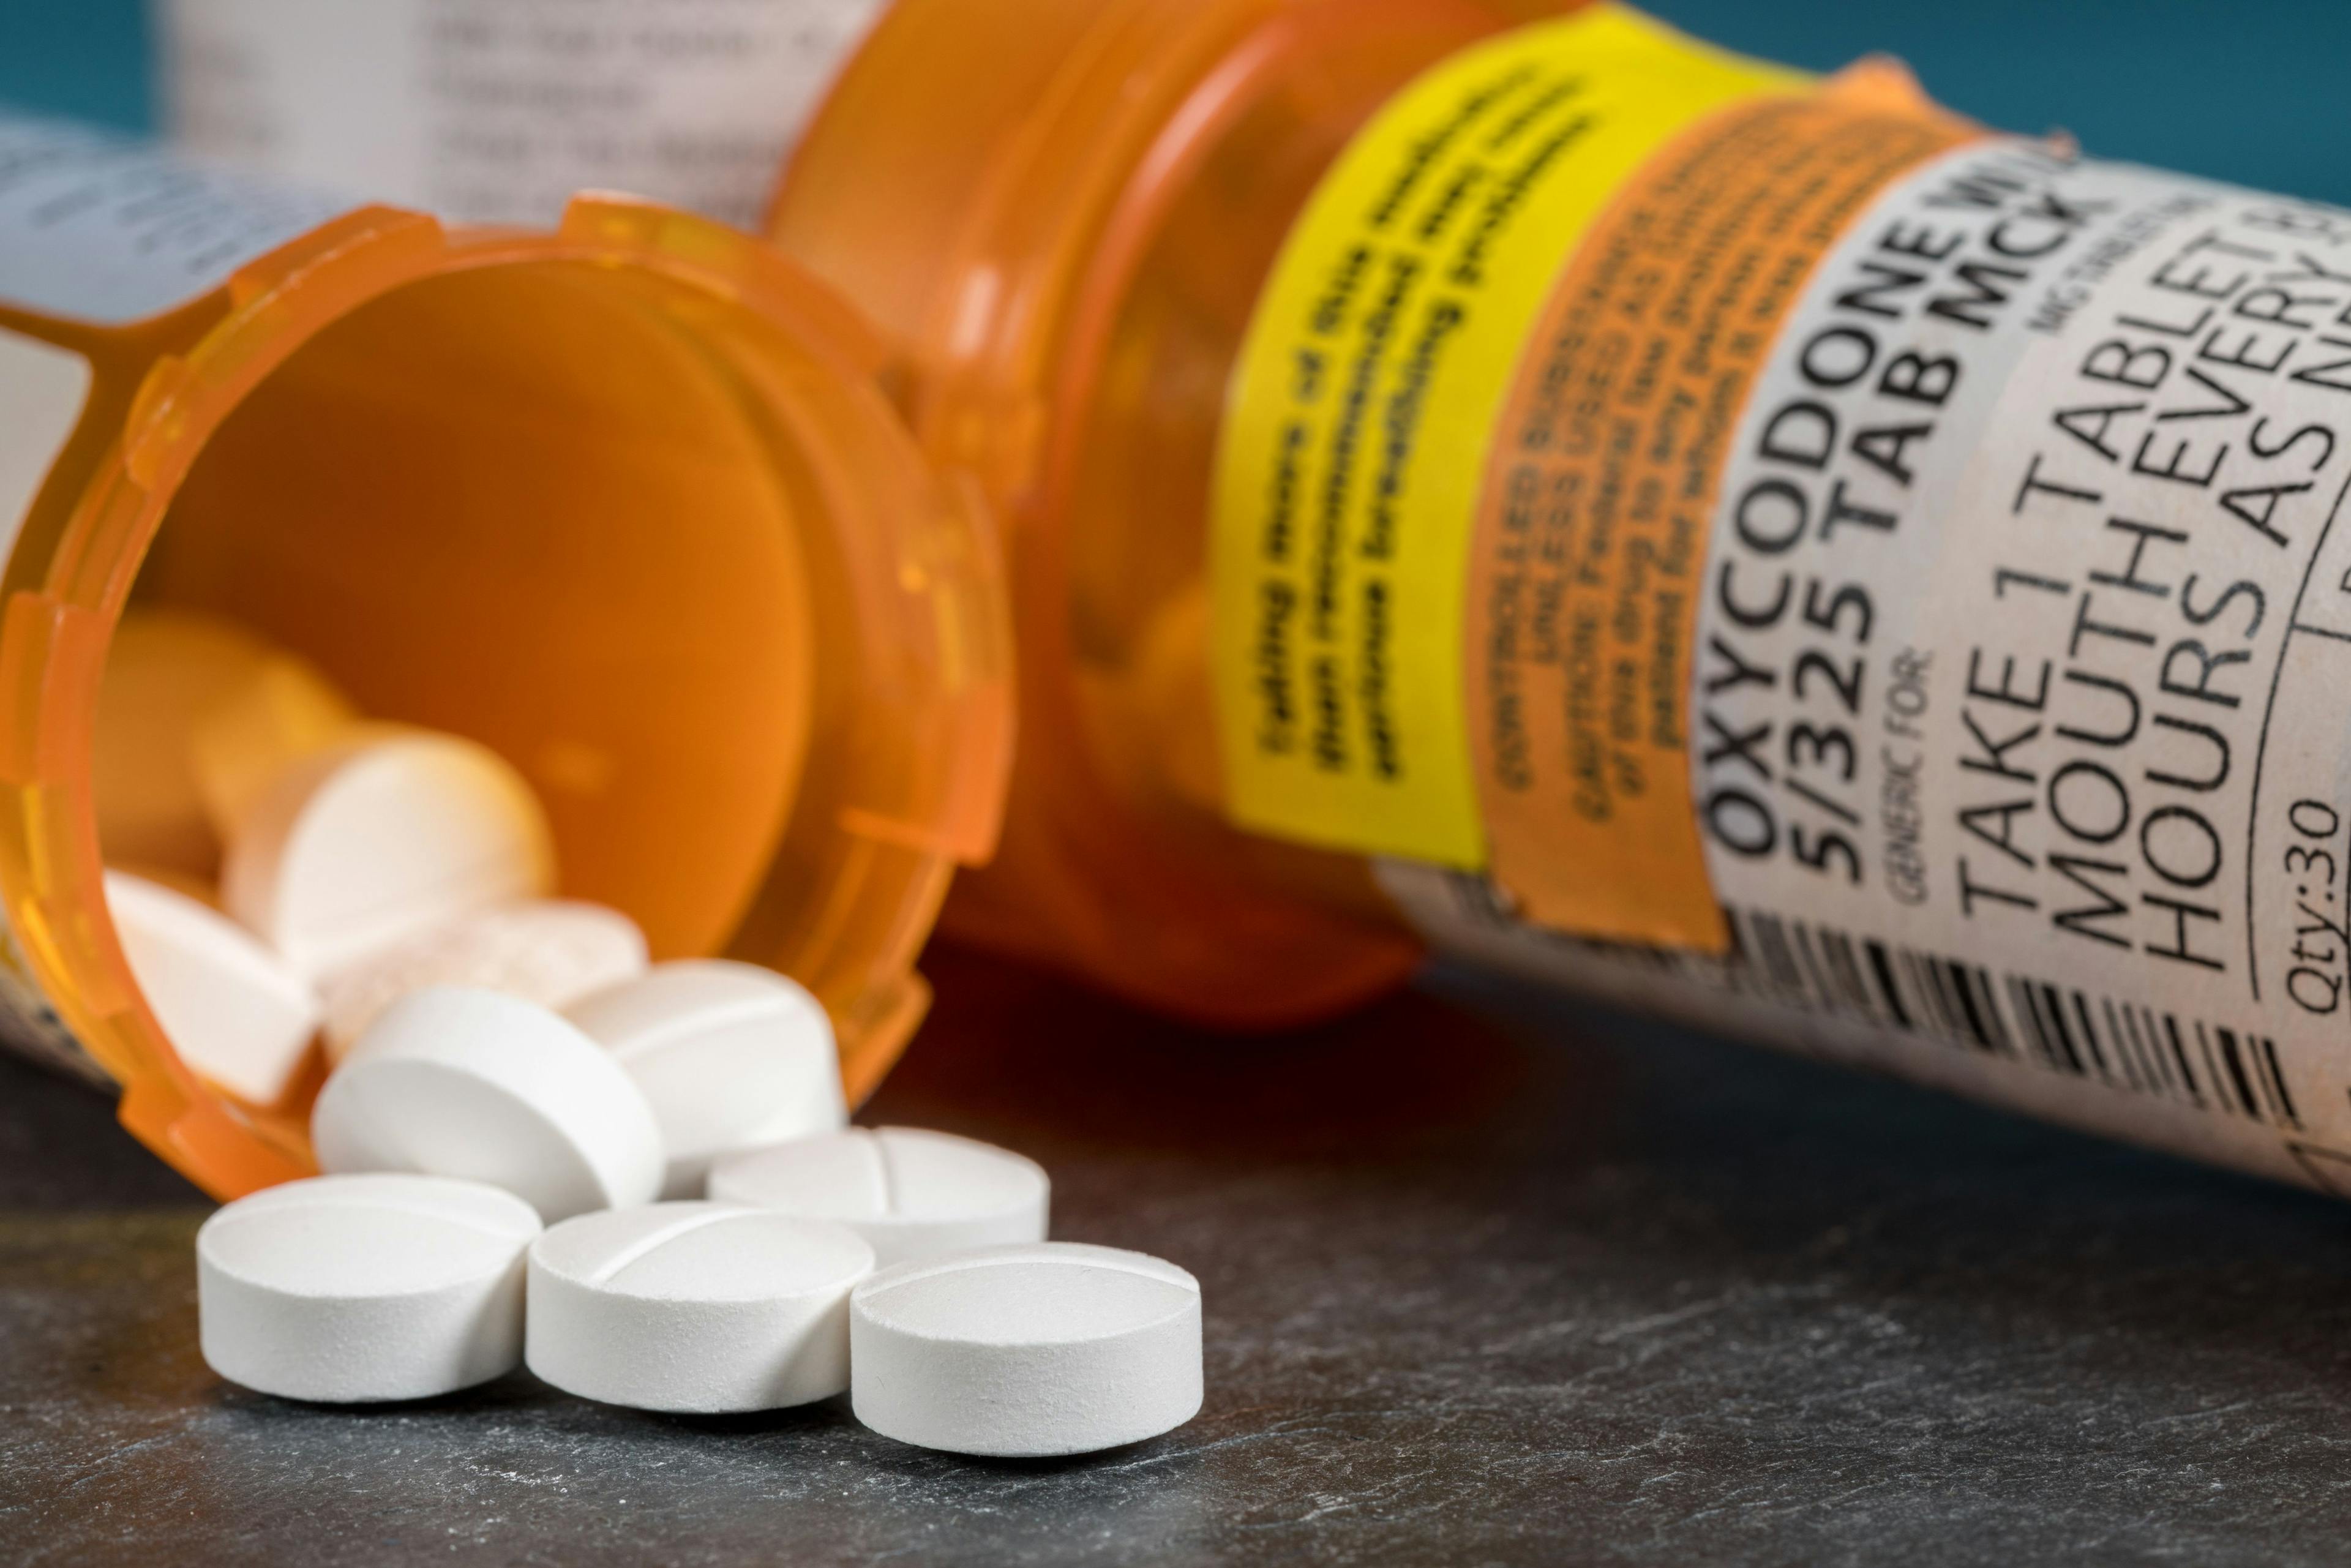 12 recommendations for prescribing opioids